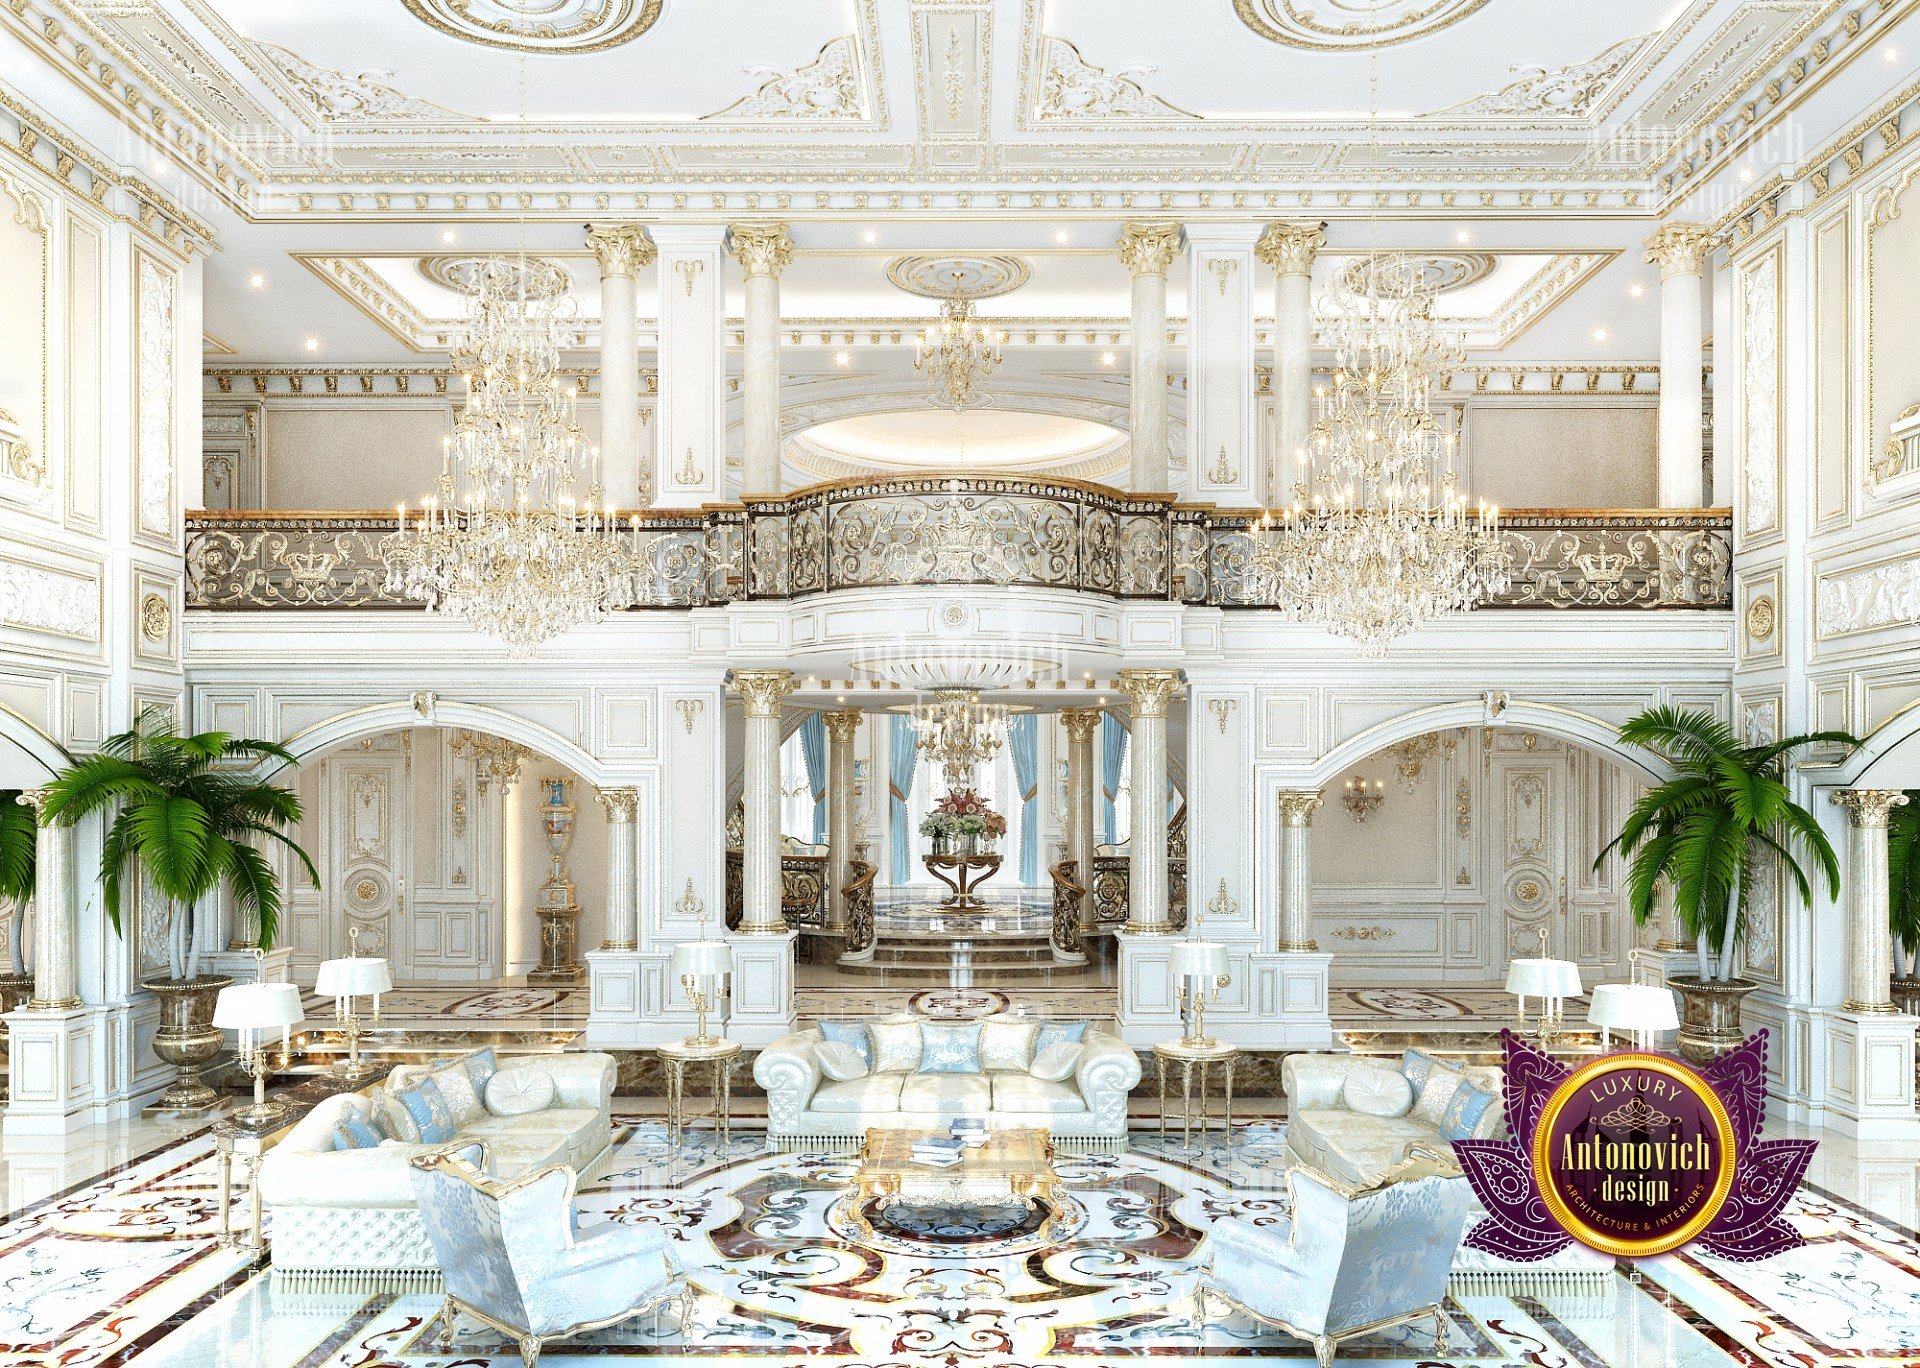 Dubai Interior Design Gallery by Luxury Antonovich Design